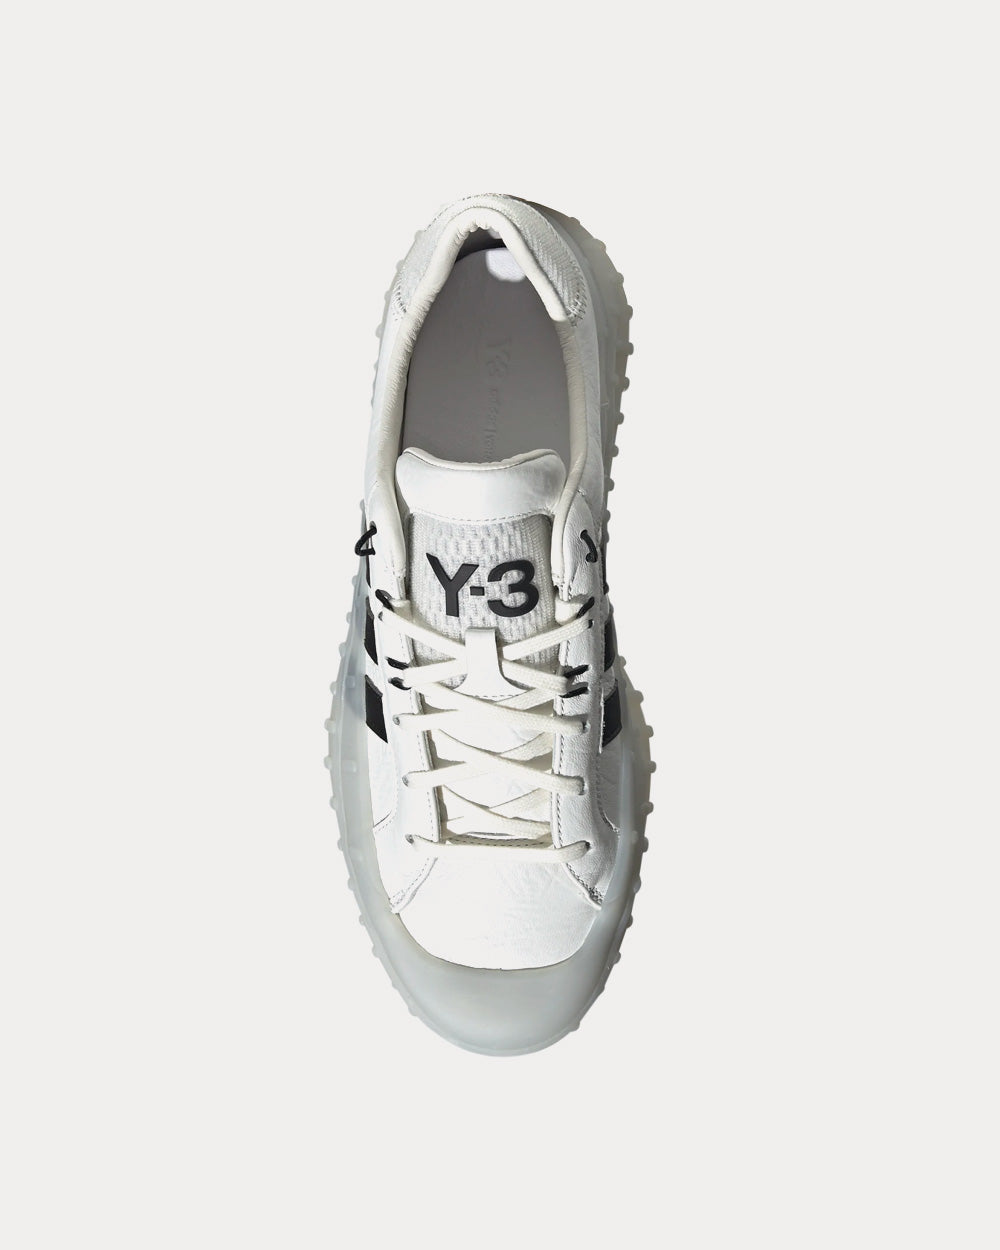 Y-3 GR.1P Core White / Black Low Top Sneakers - Sneak in Peace